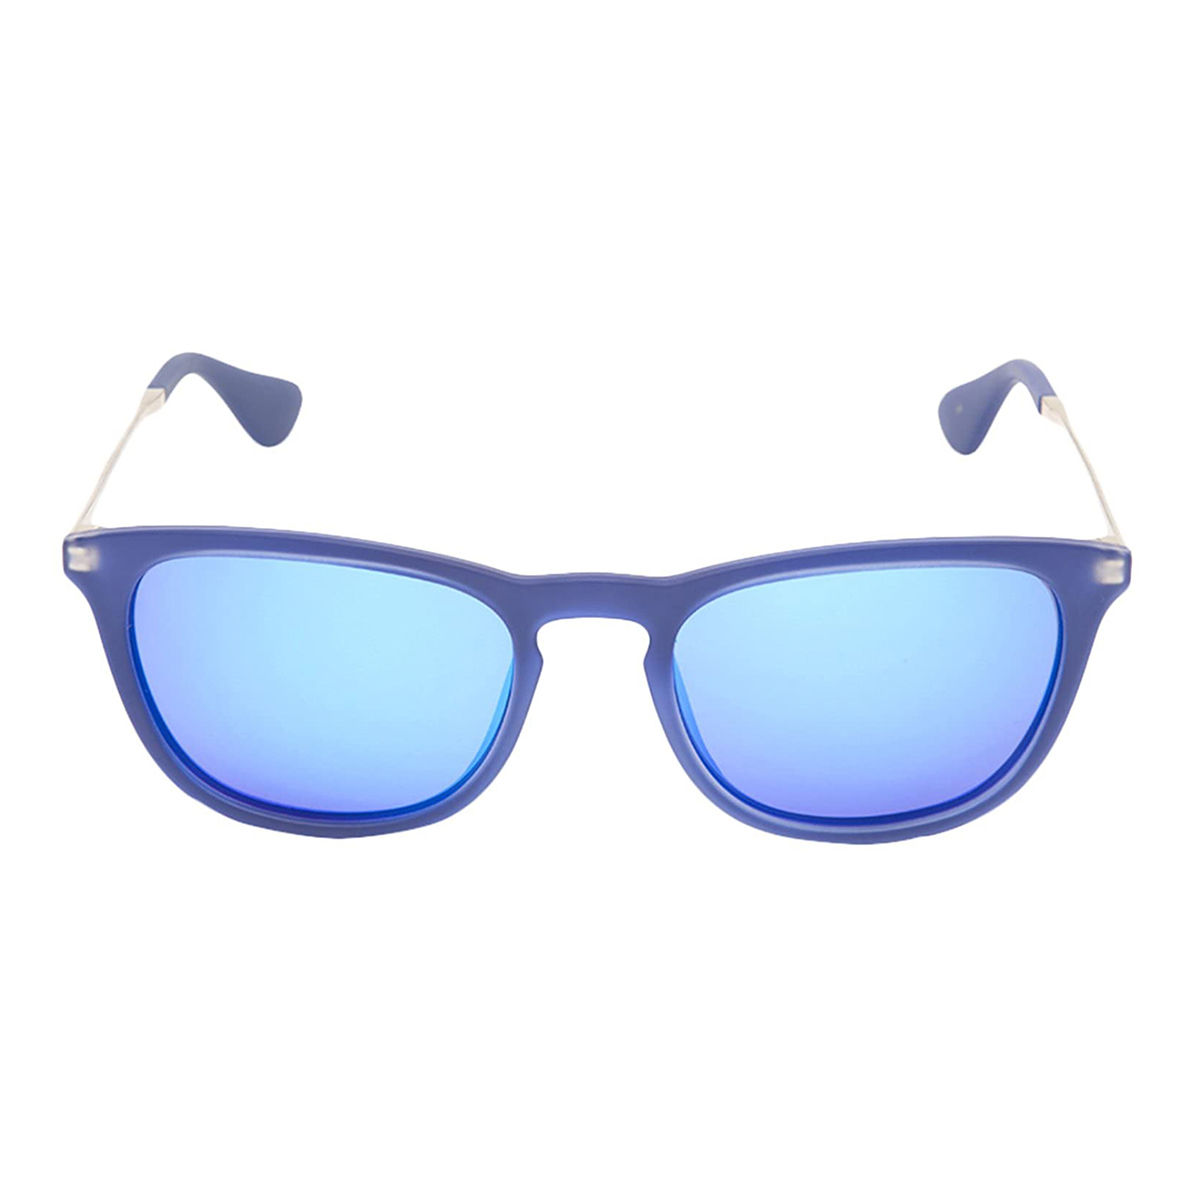 Invu Sunglasses Rectangular Sunglass With Blue Lens For Men: Buy Invu ...